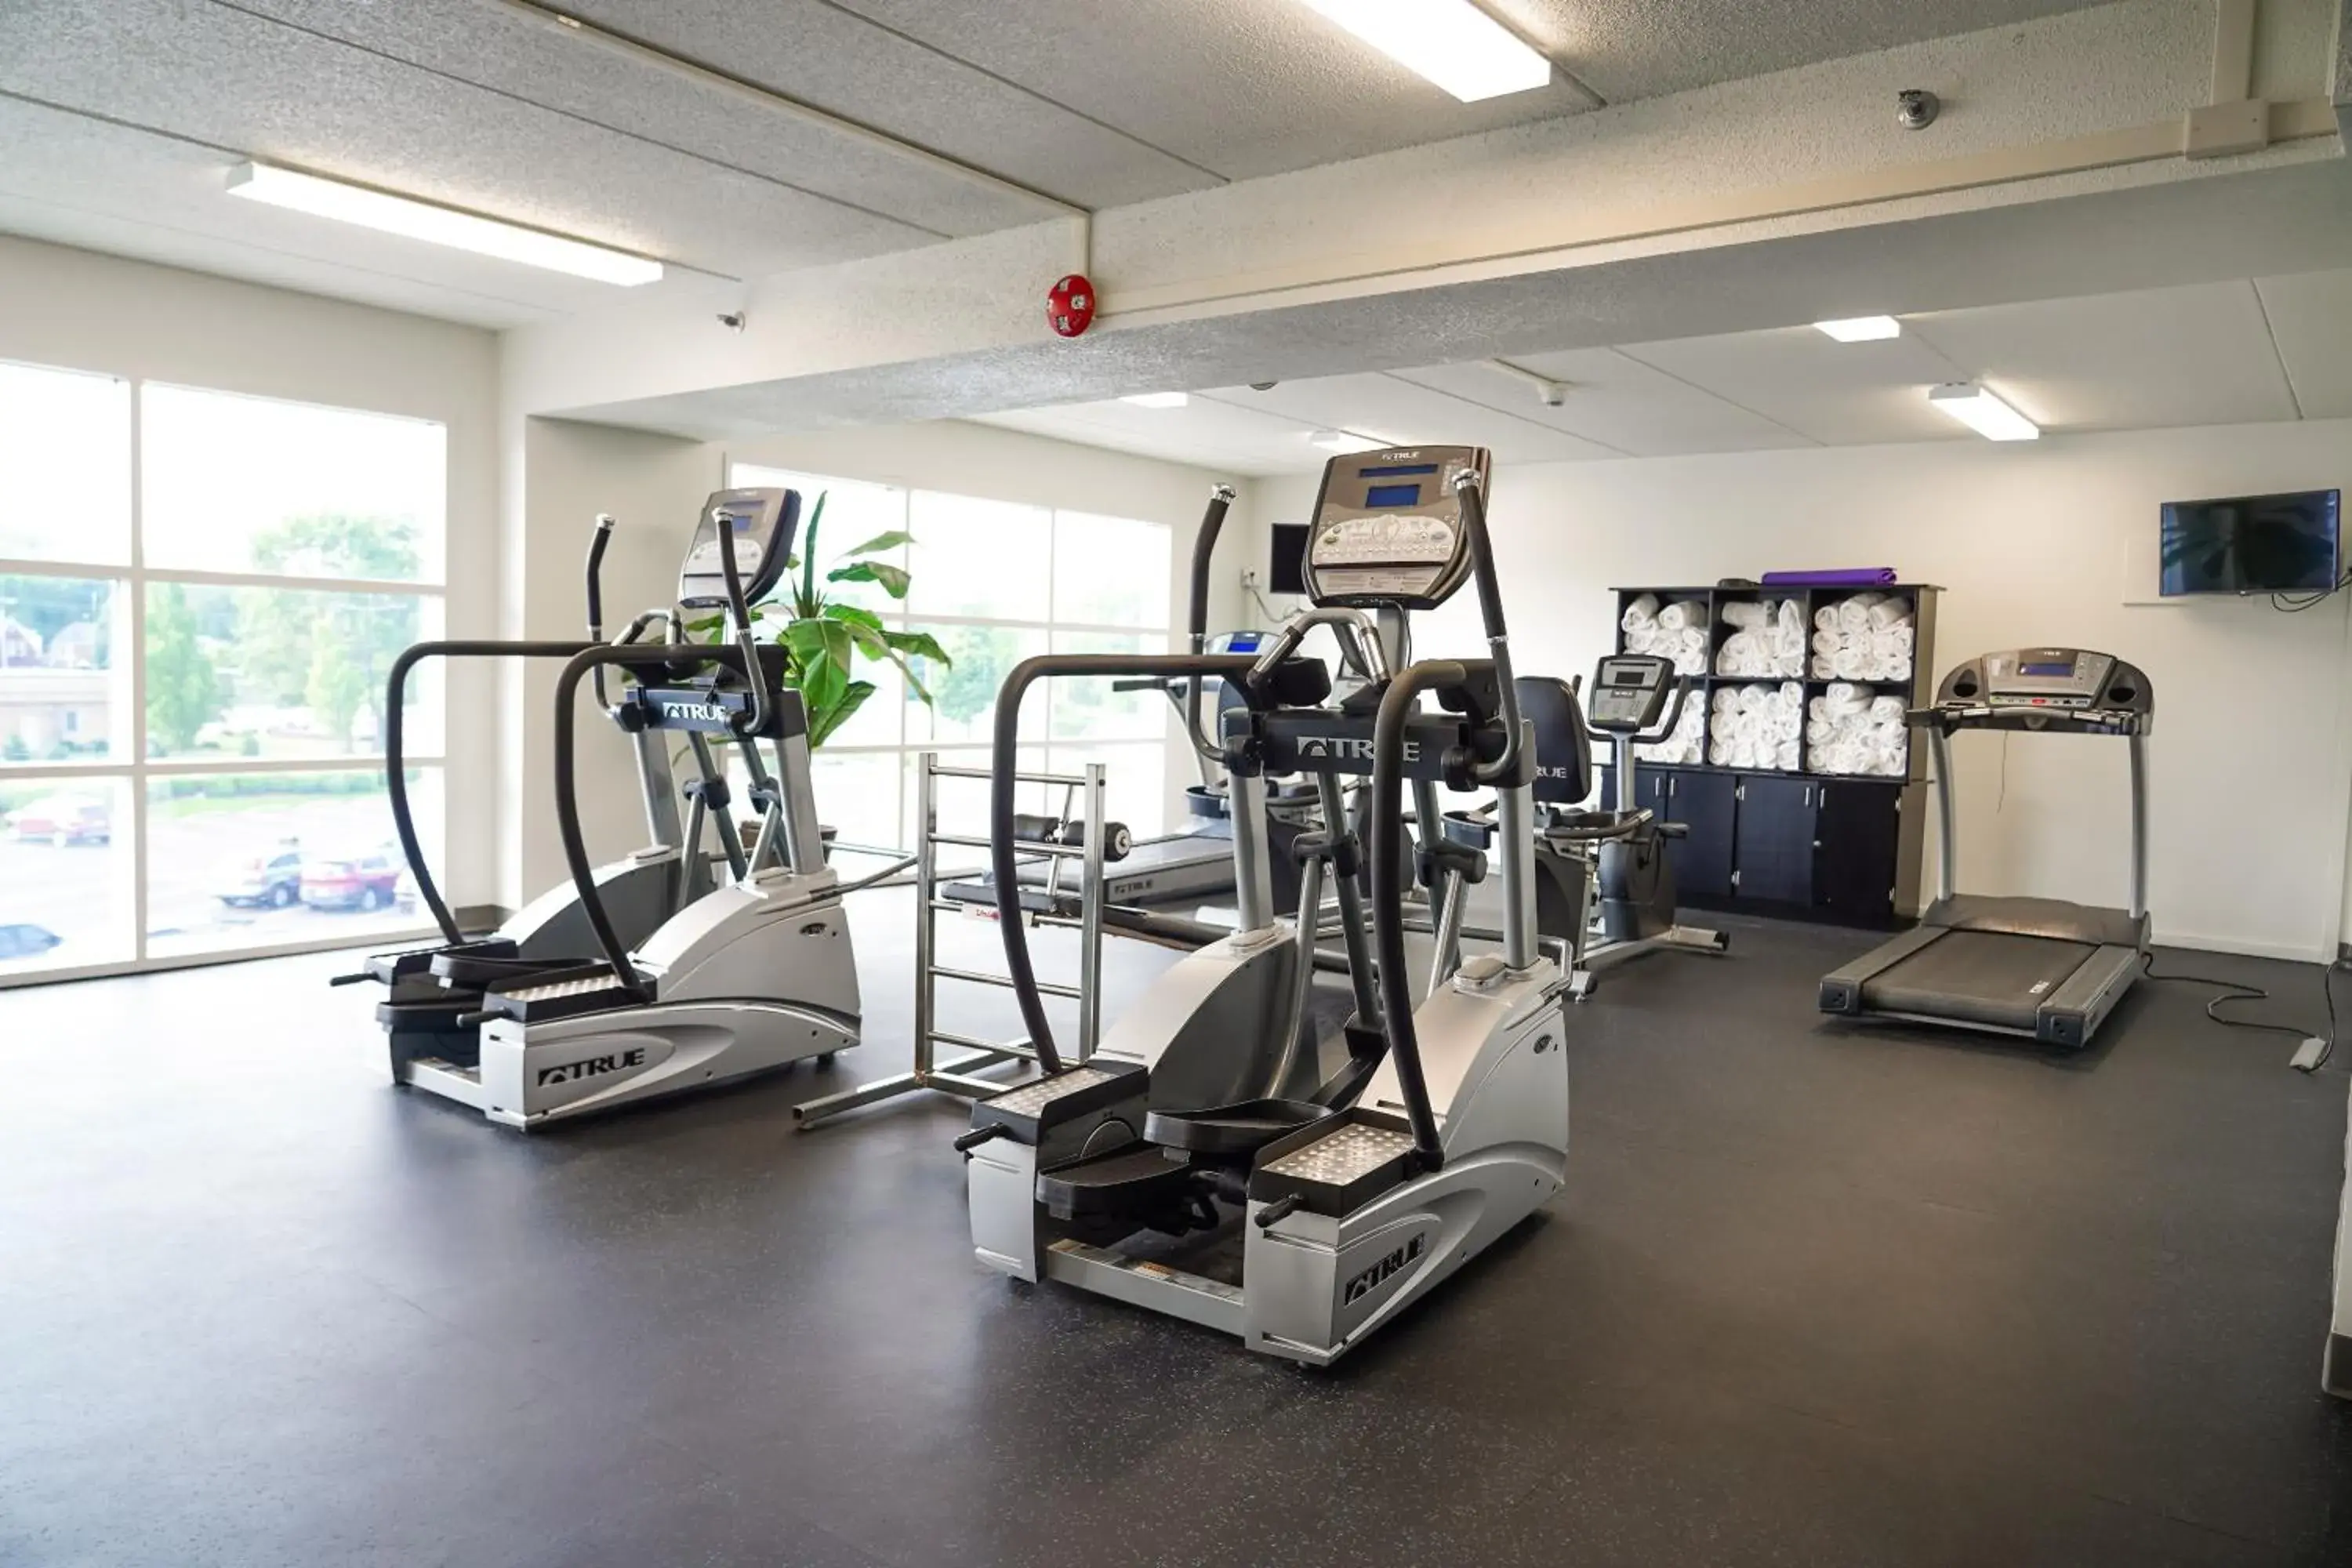 Fitness centre/facilities, Fitness Center/Facilities in Cedar Point Castaway Bay Indoor Water Park